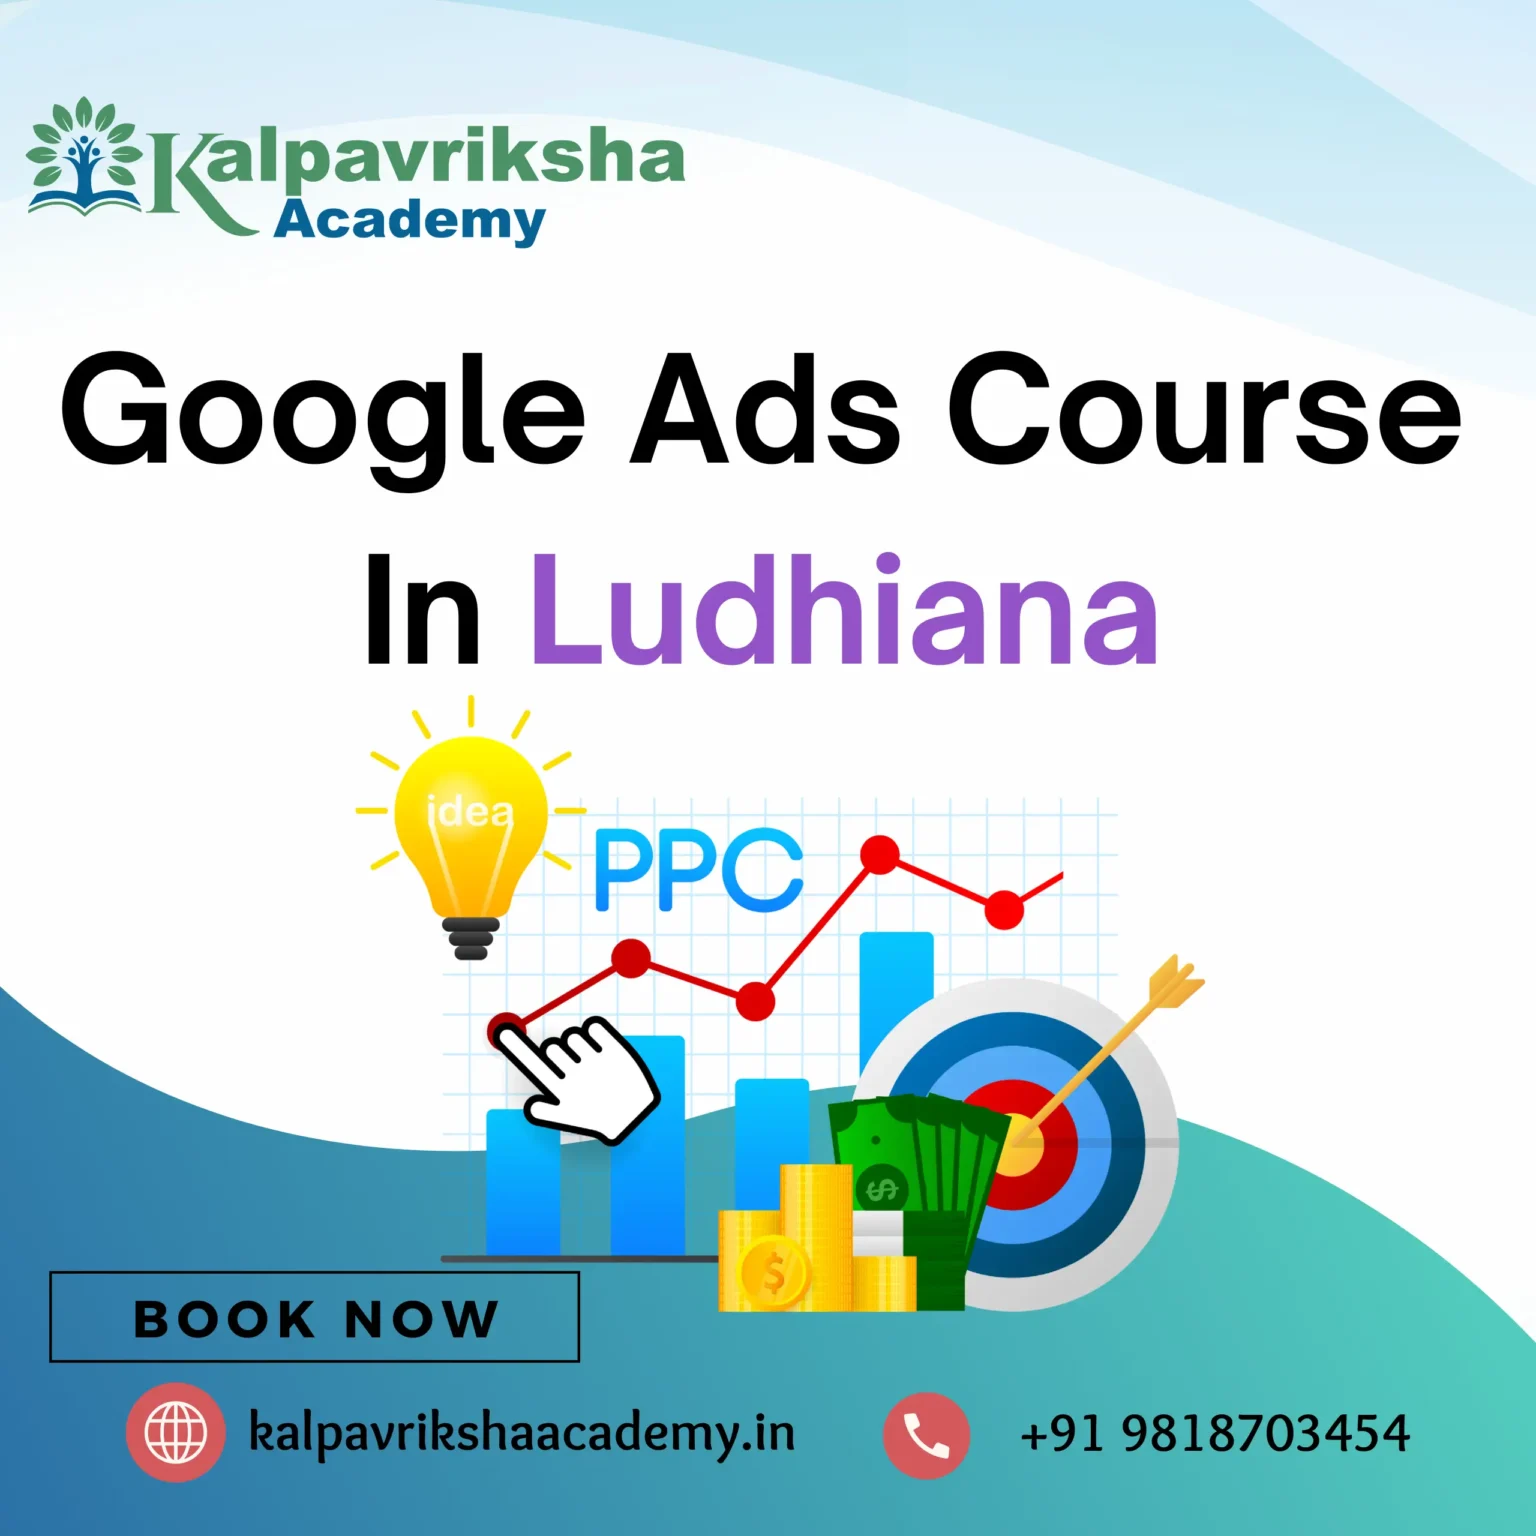 Free Google Ads Course In Ludhiana - Kalpavriksha Academy